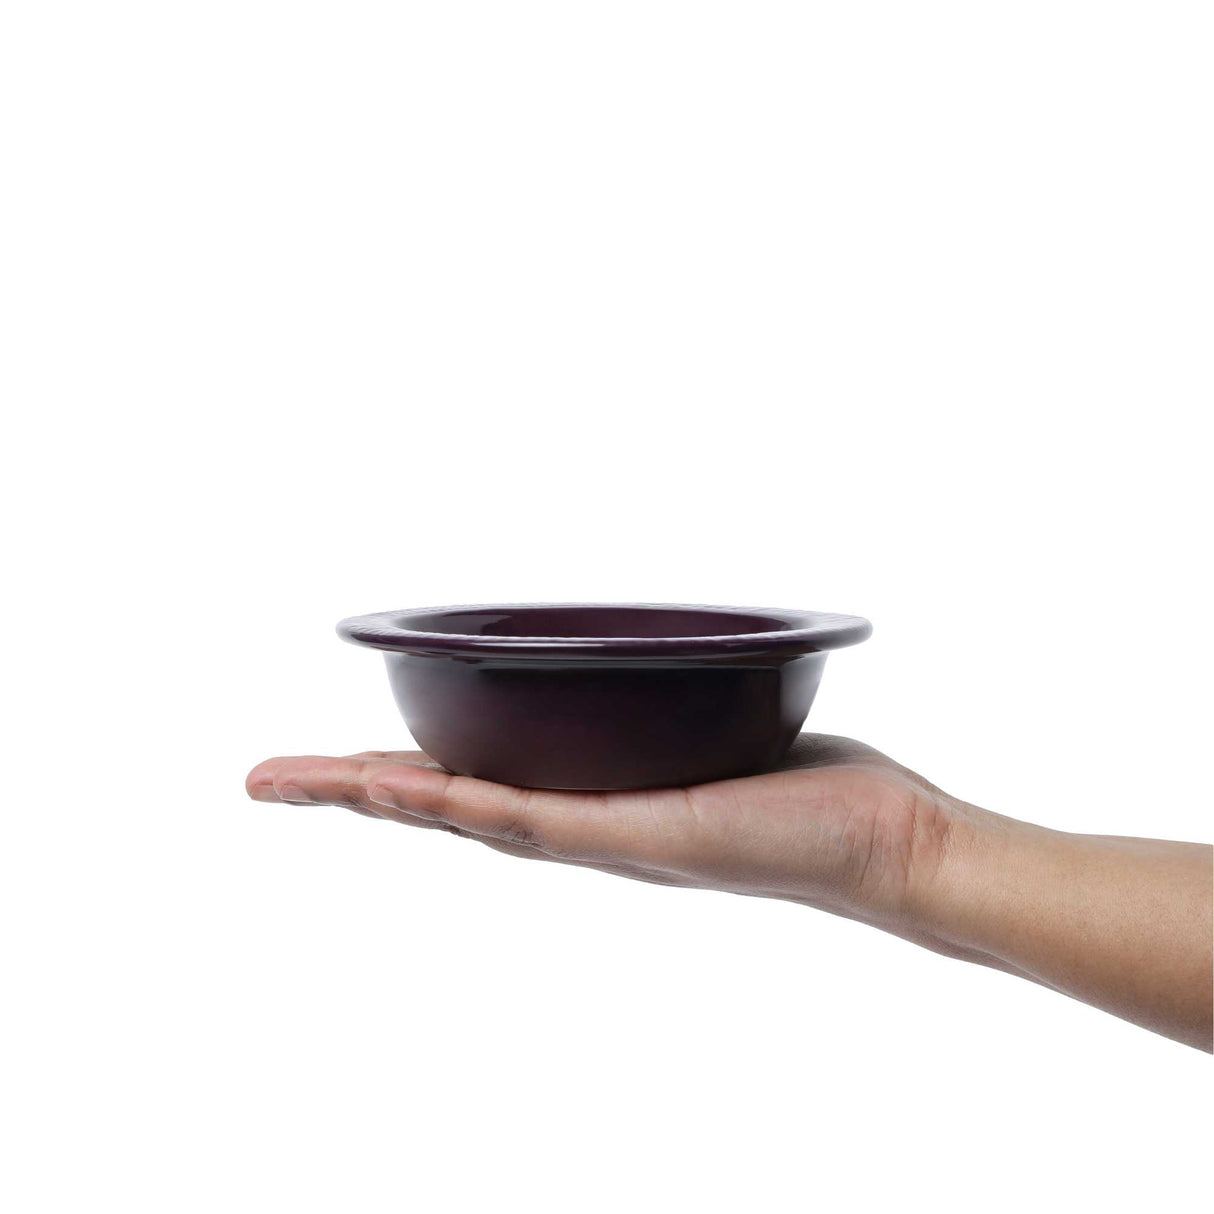 Ceramic bowl in hand